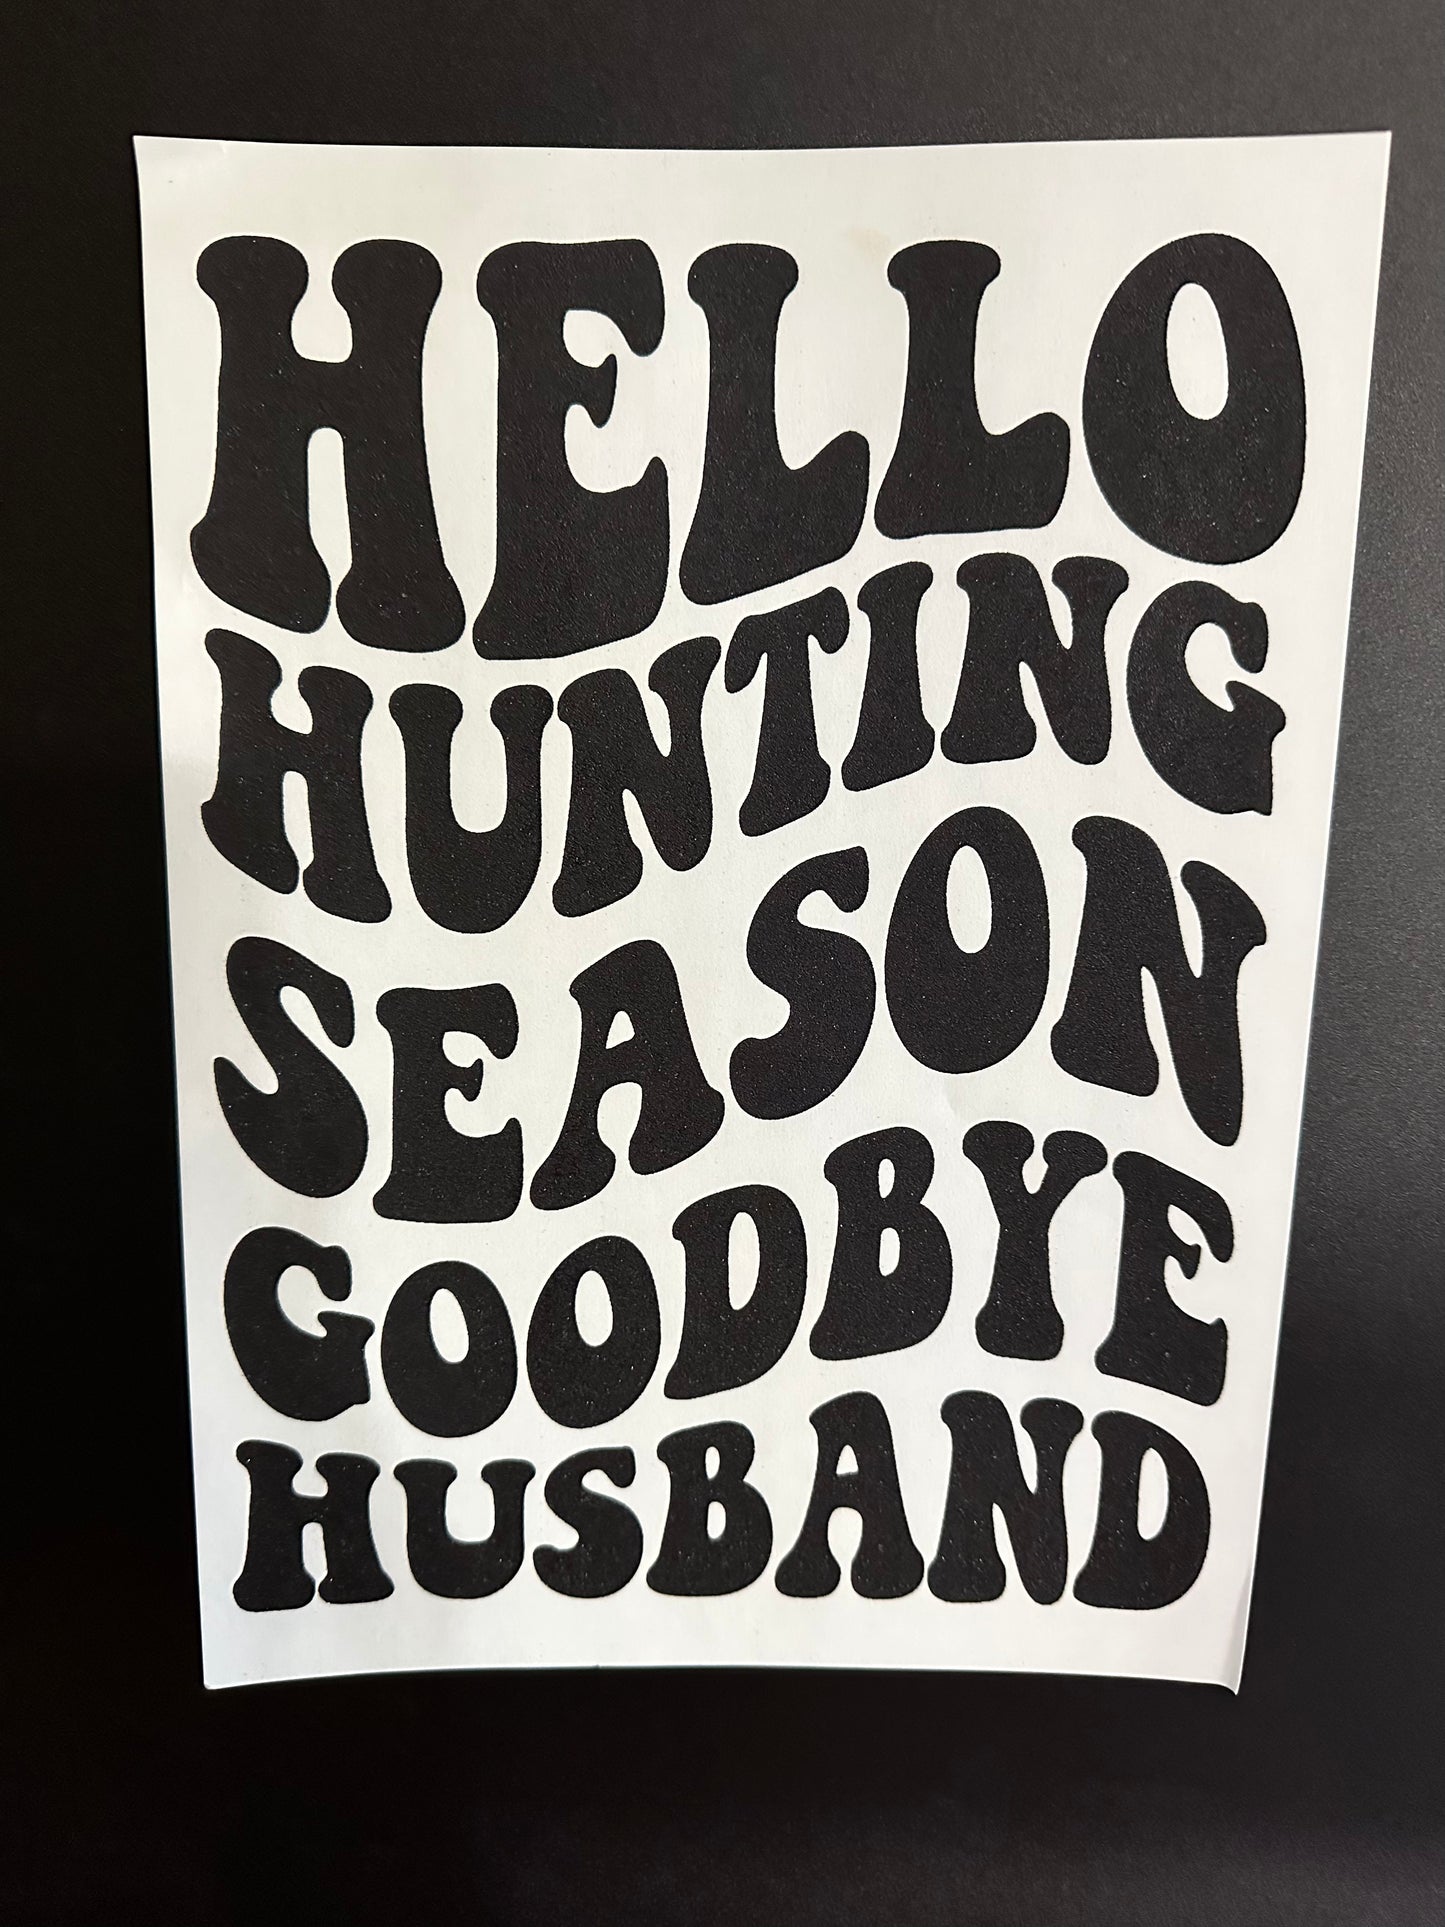 Hello Hunting Season Goodbye Husband Black